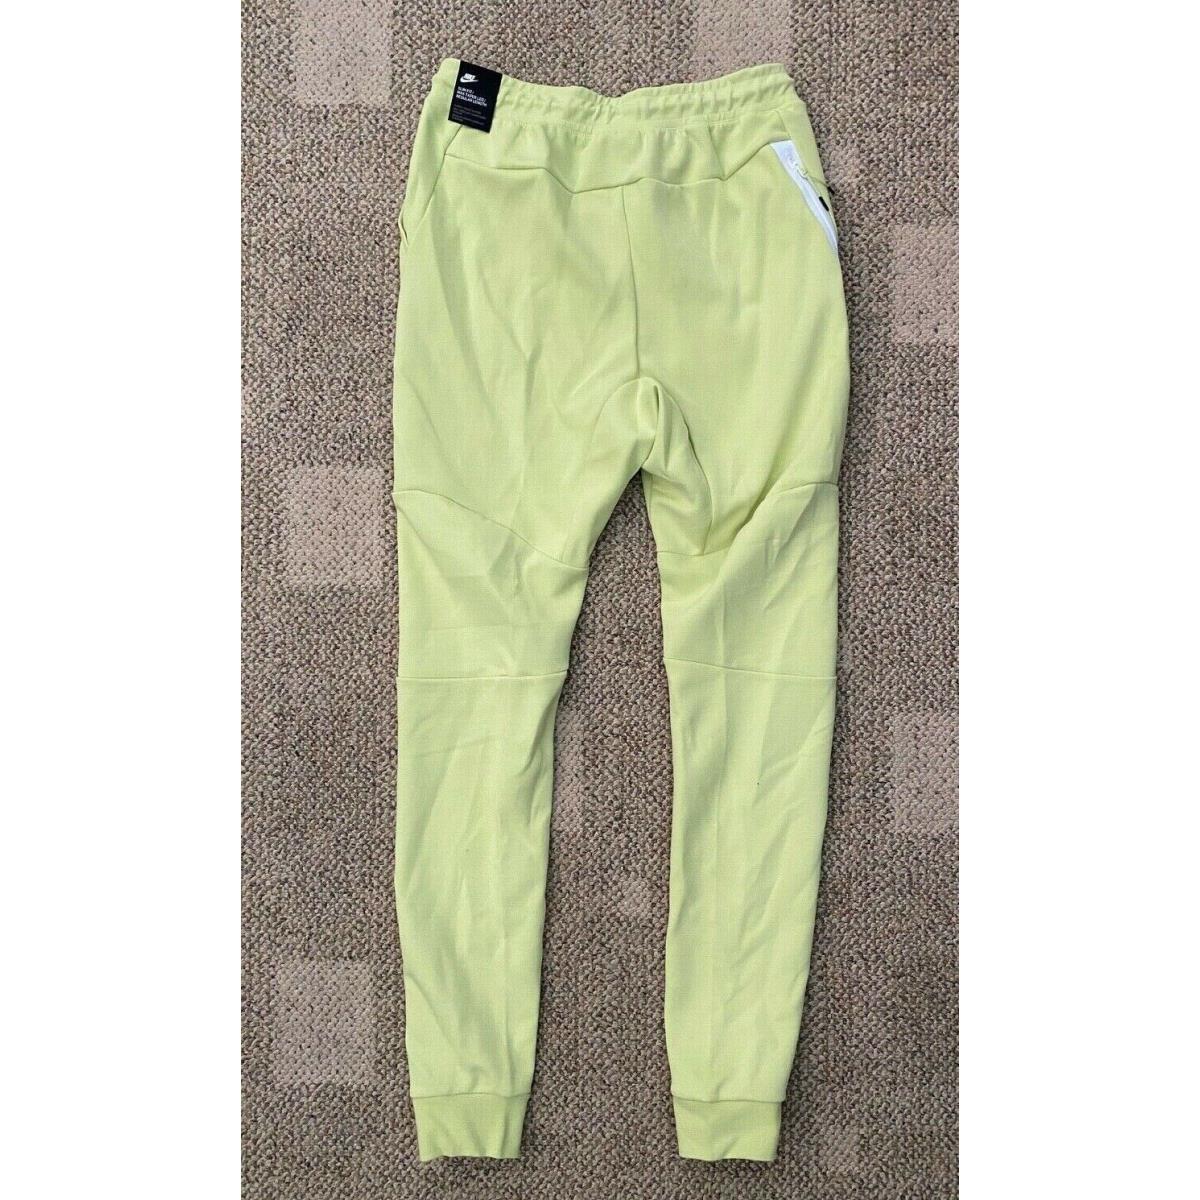 Nike clothing  - Green 2